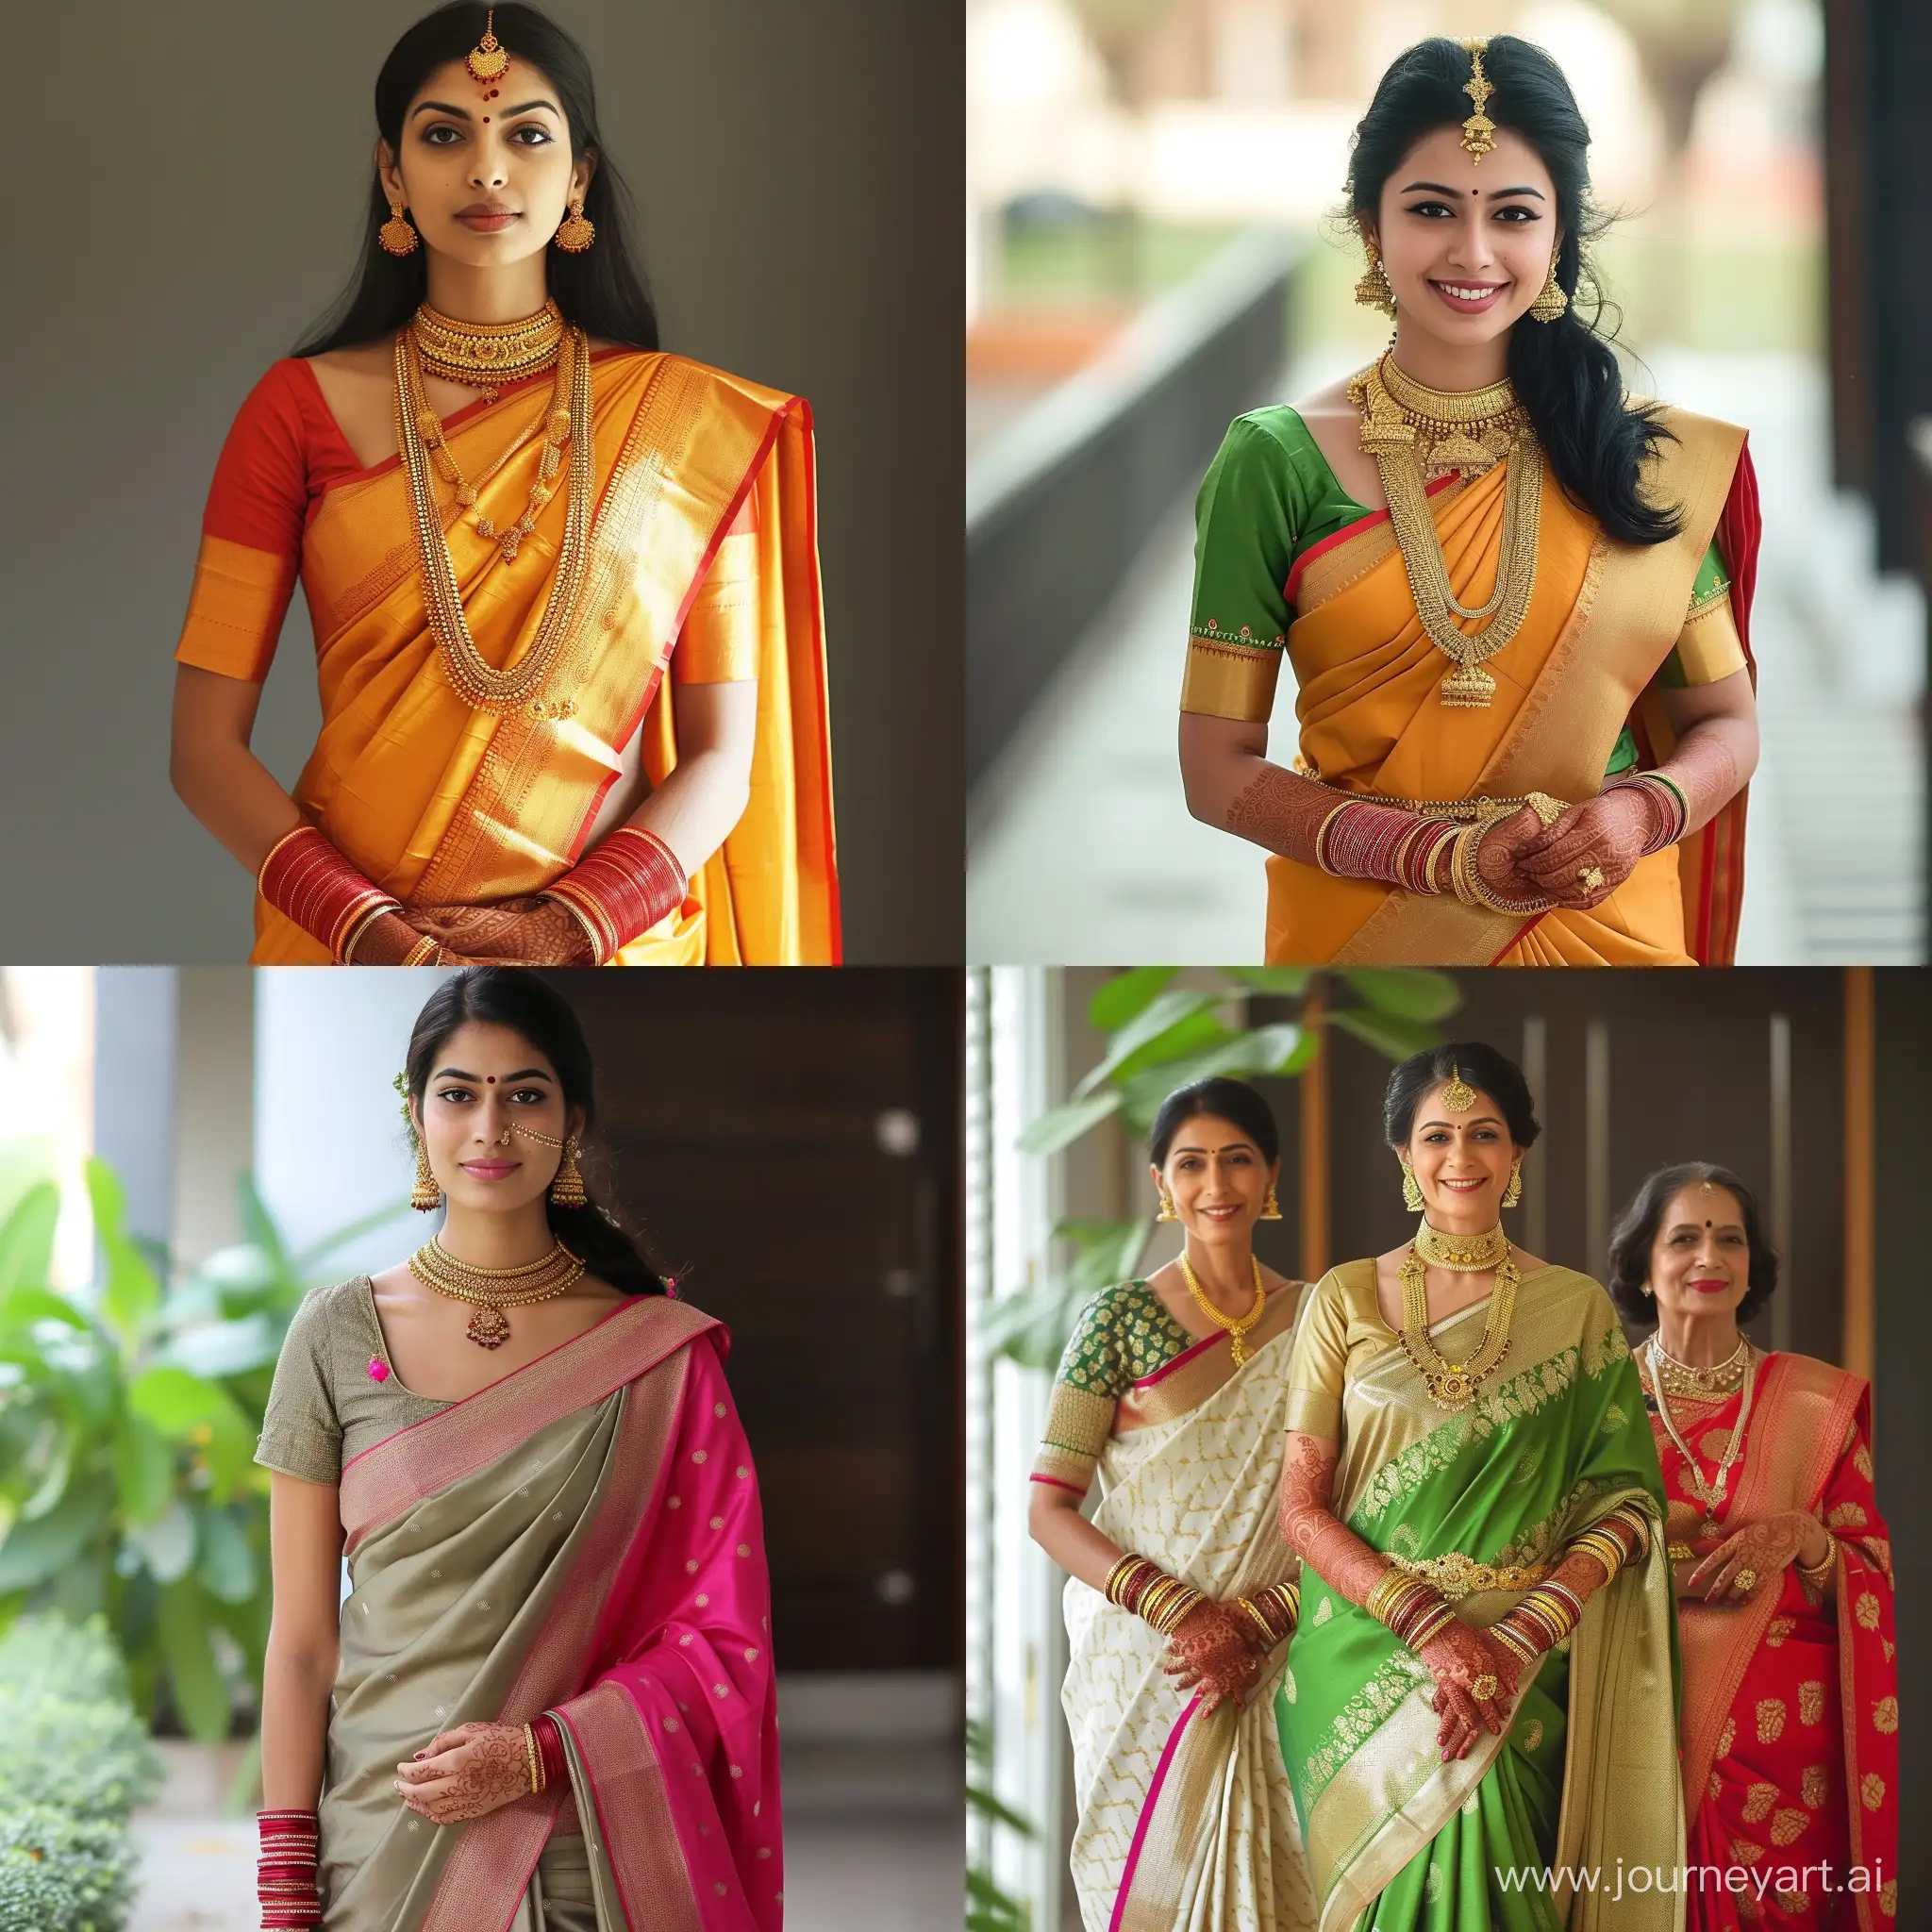 Elegant-Indian-Women-Showcasing-Saree-Fashion-in-Vibrant-Diversity